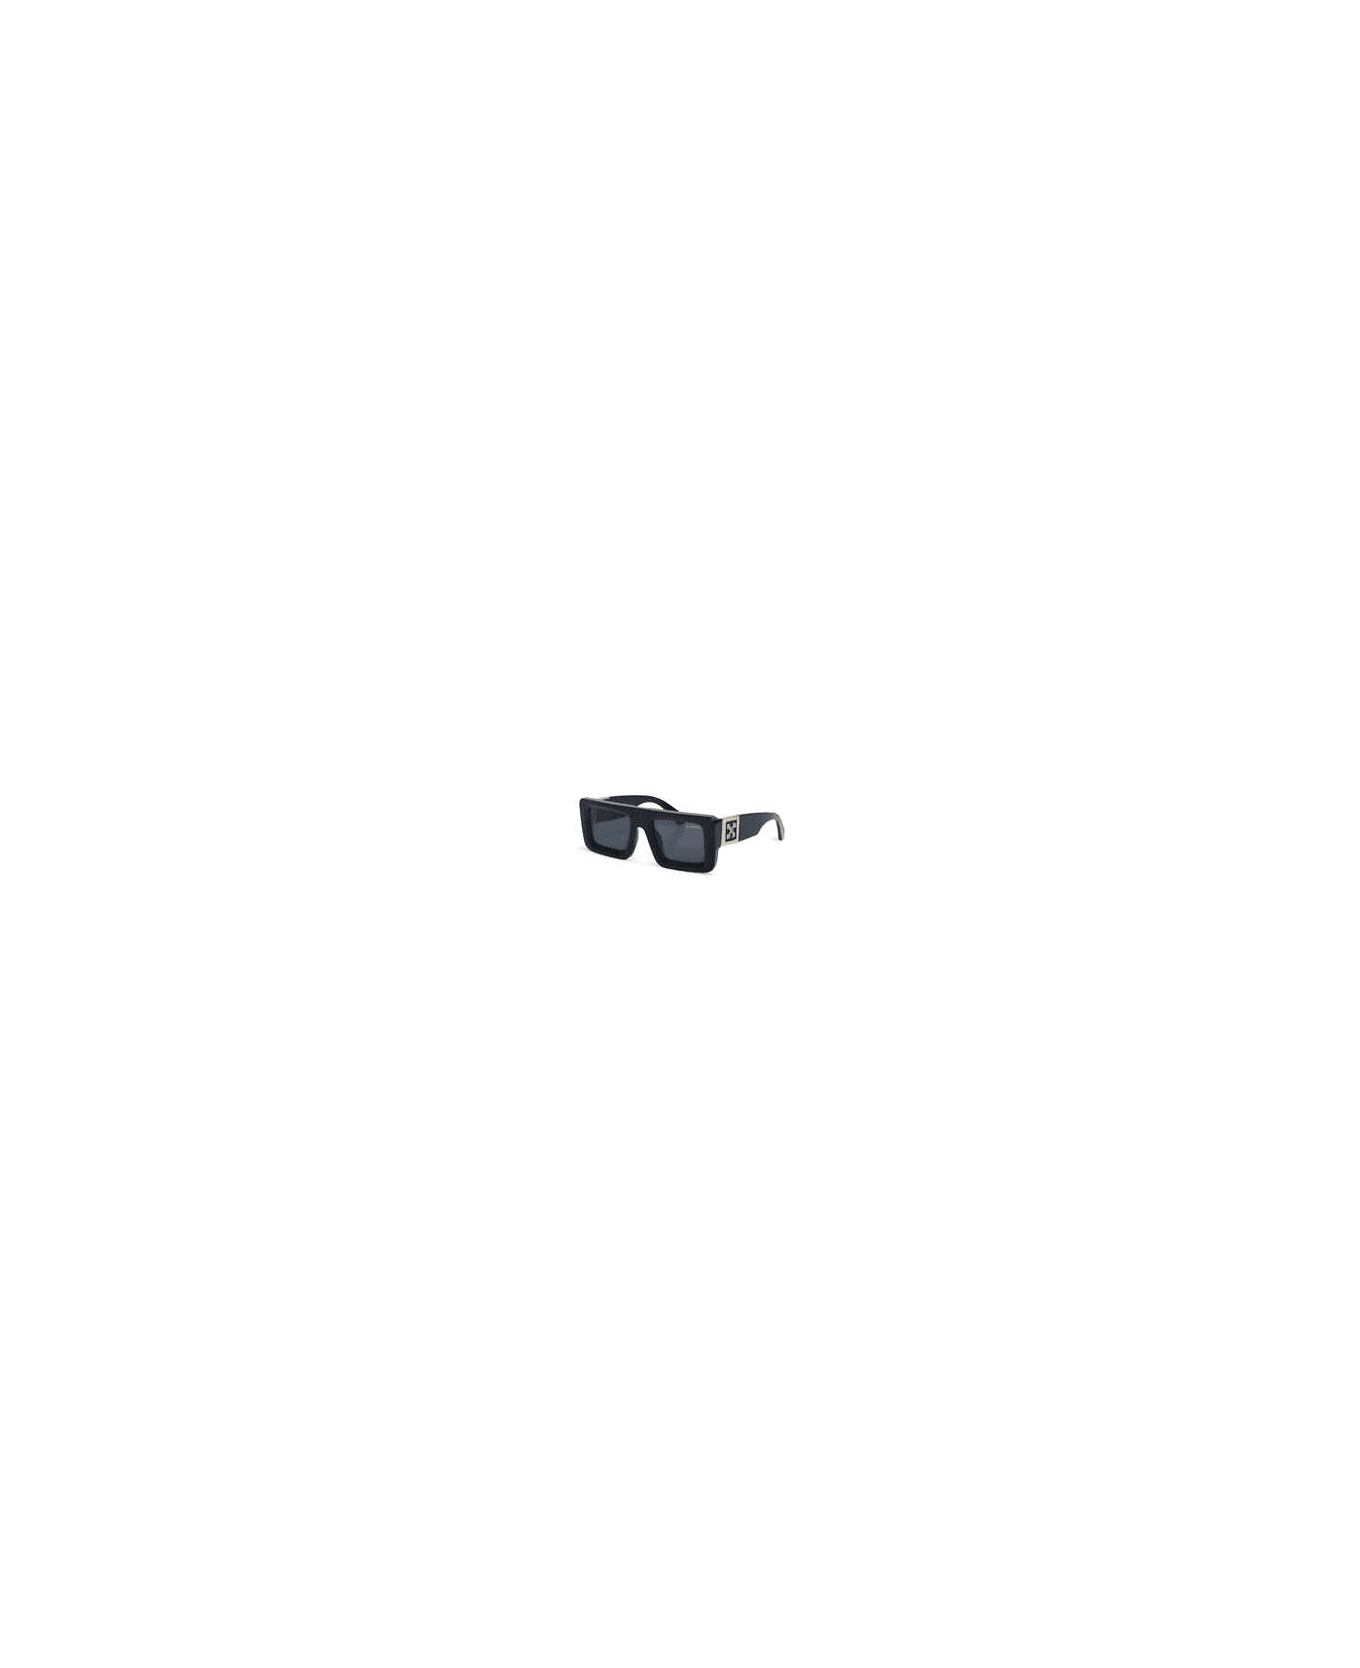 Off-White LEONARDO SUNGLASSES Sunglasses - Black Dark Grey